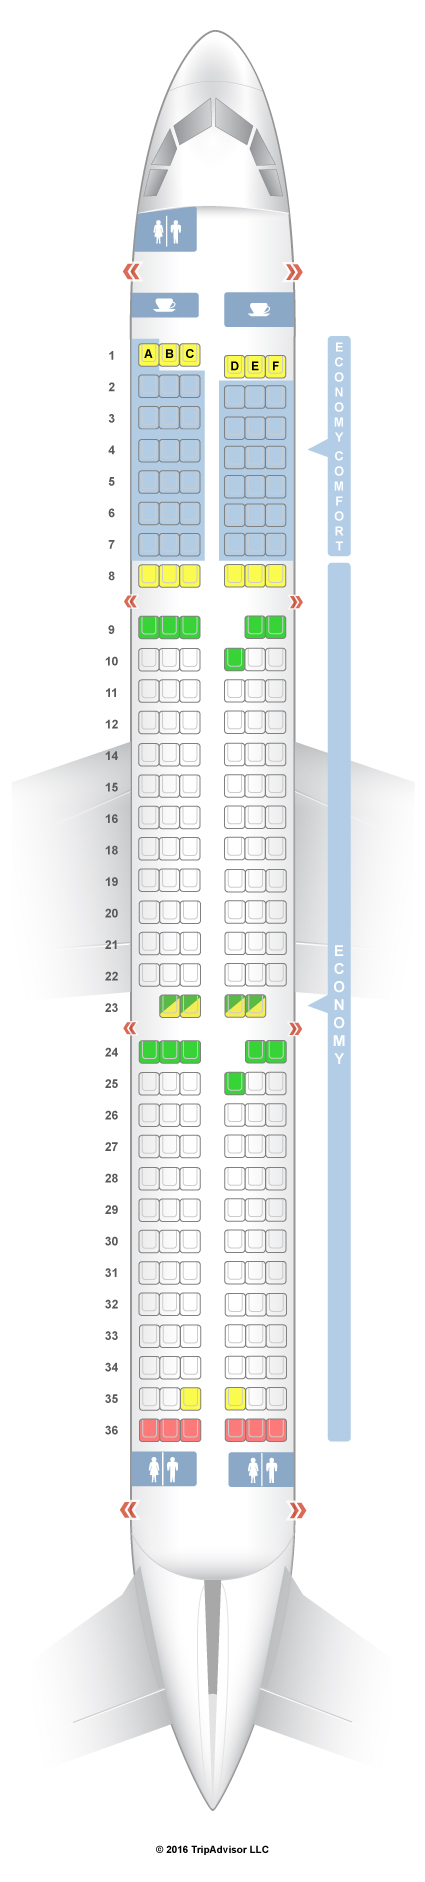 Alitalia Airbus A319 Seating Chart